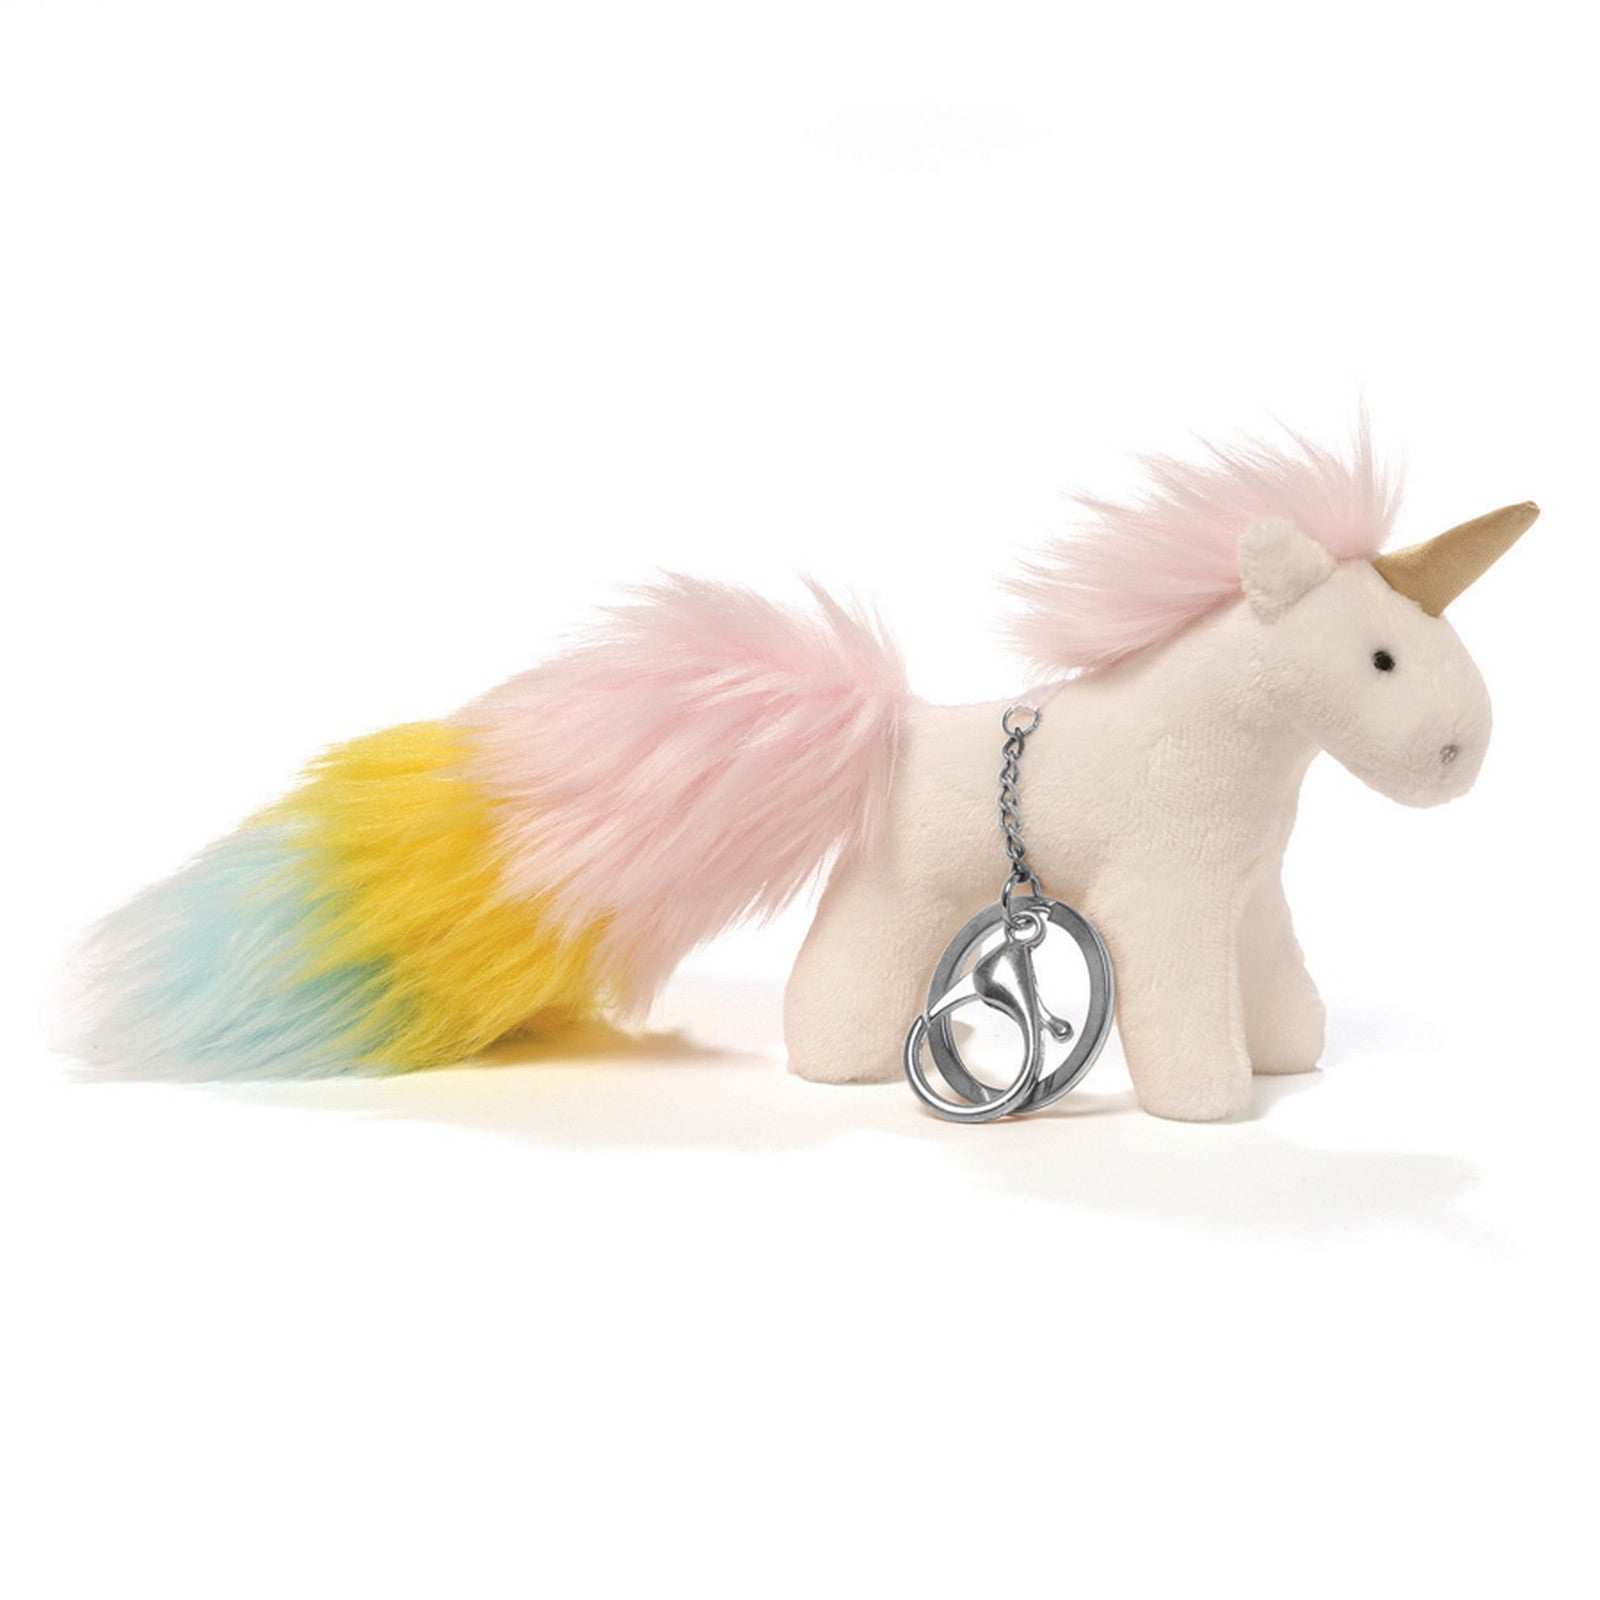 Gund - Unicorn Rainbow Poof Tails - 4"